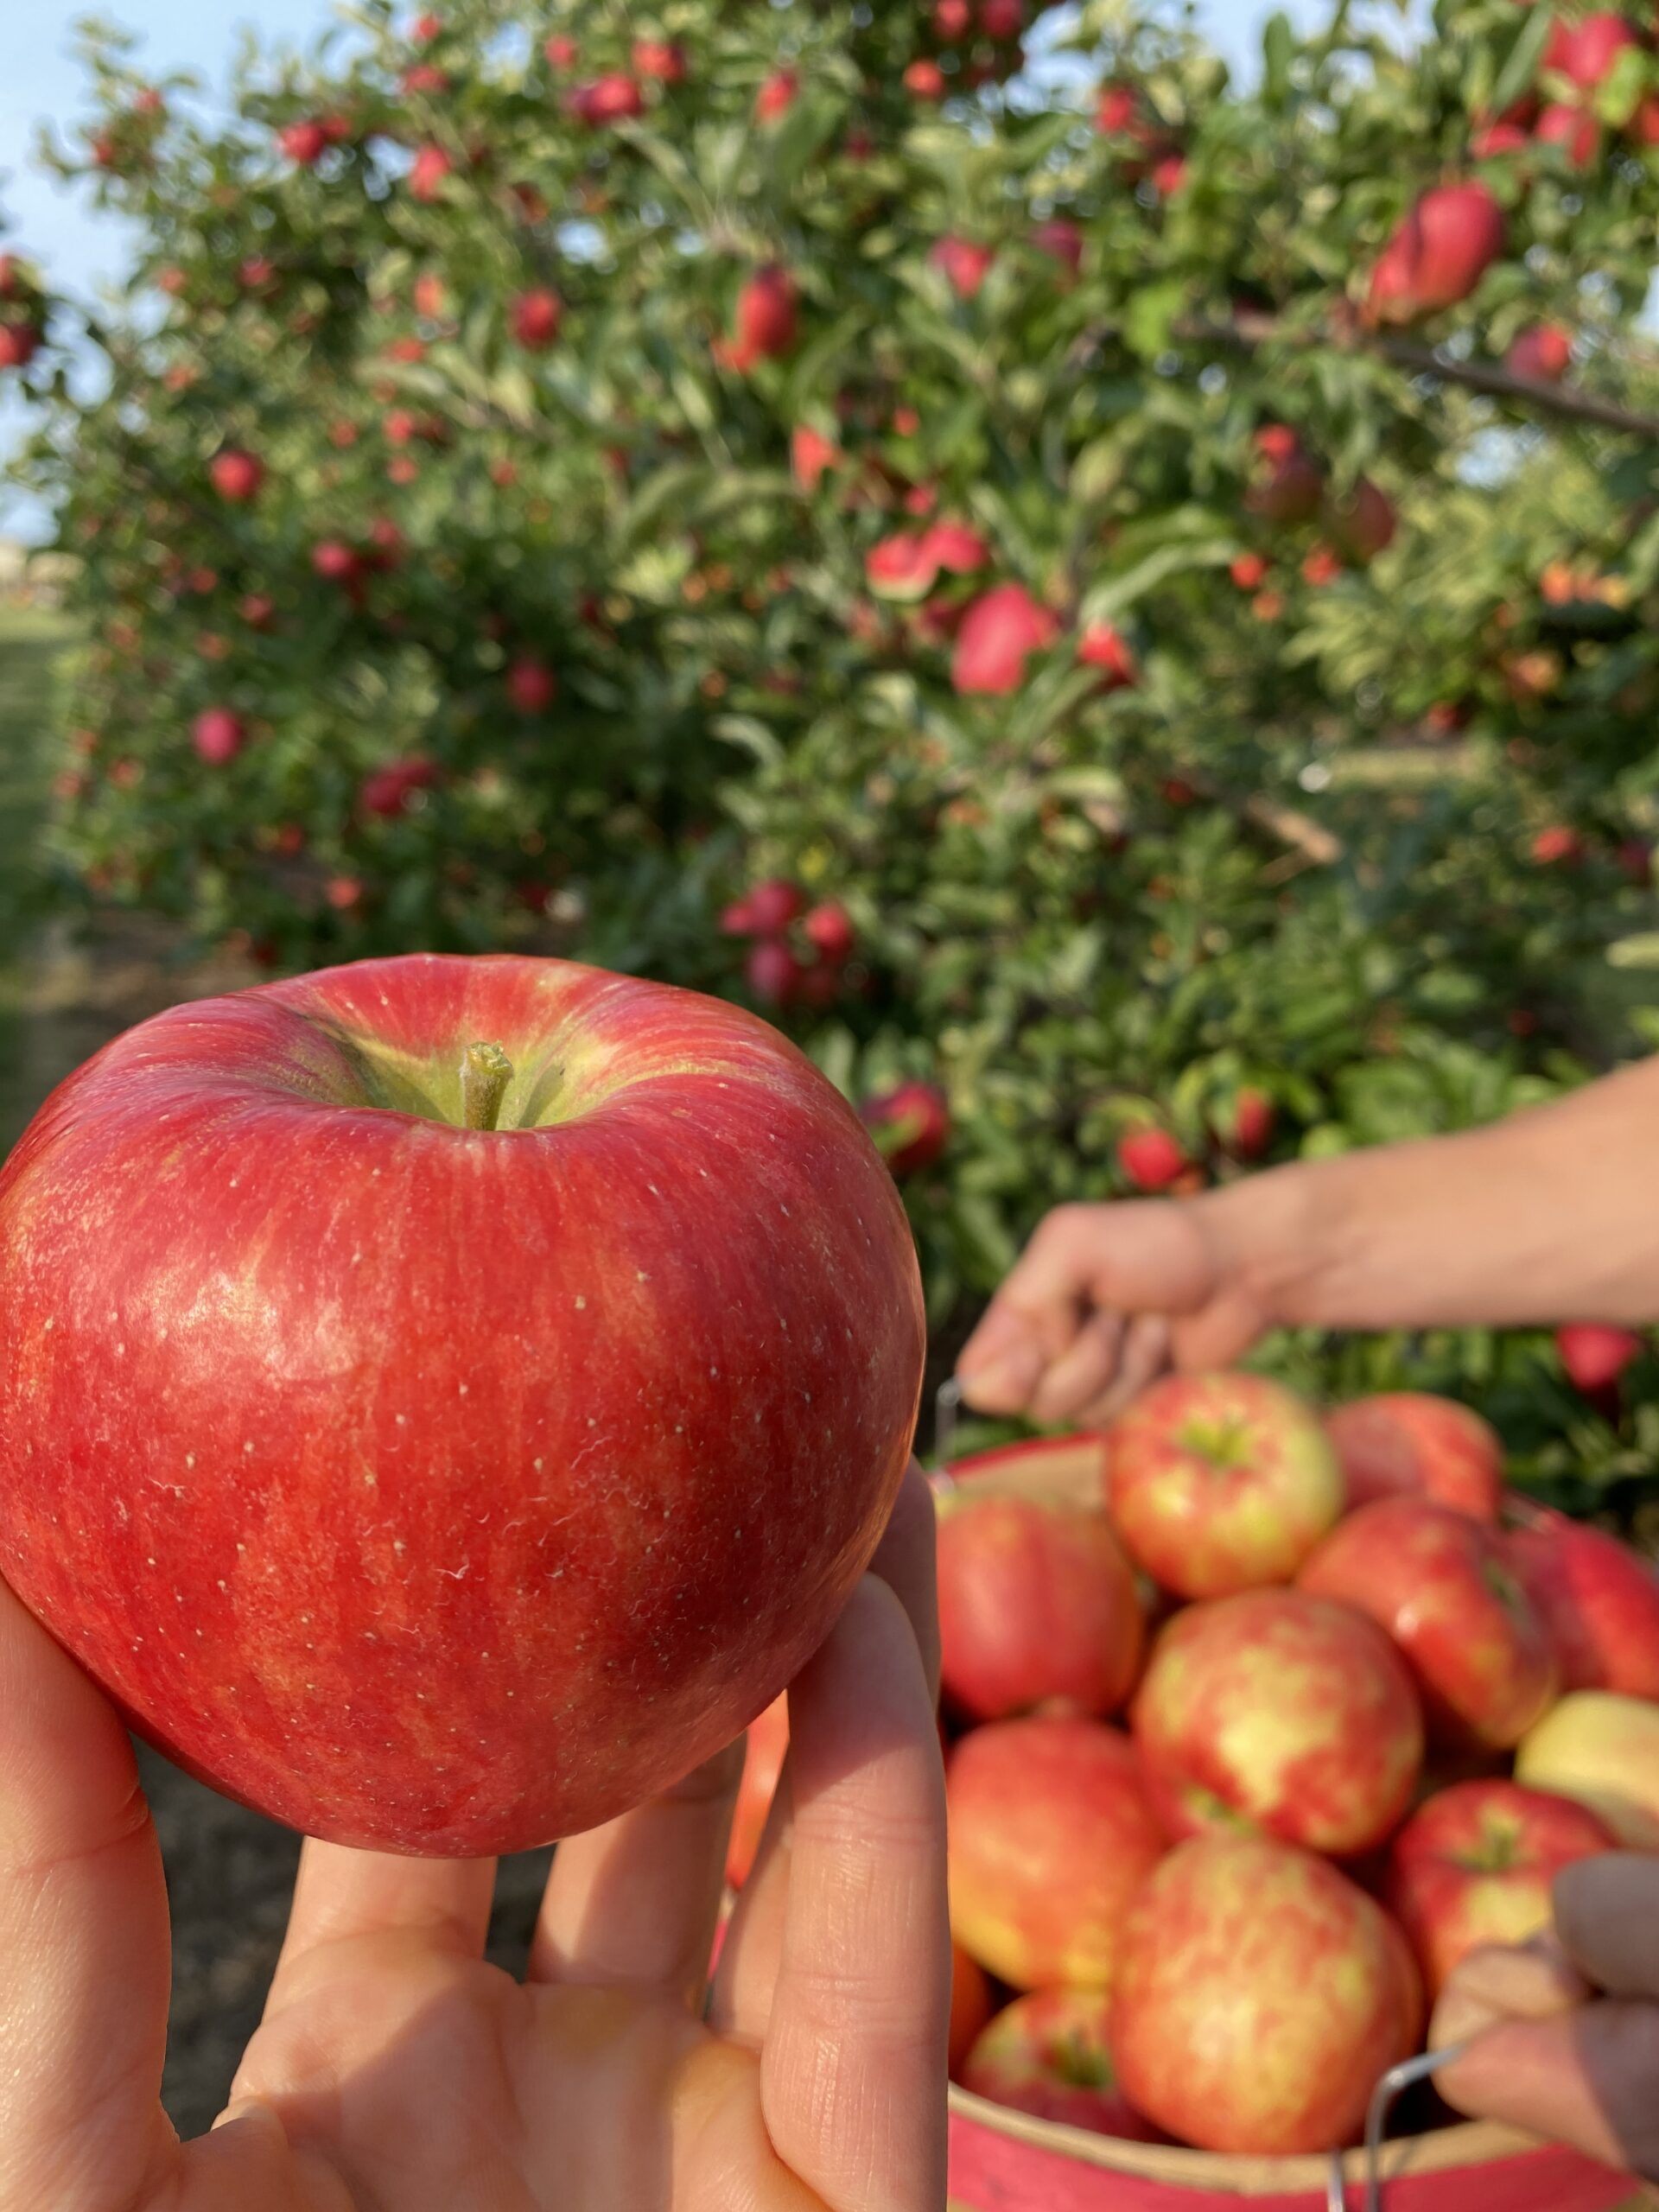 https://friske.com/wp-content/uploads/2020/10/hc-apples-in-field-scaled.jpg